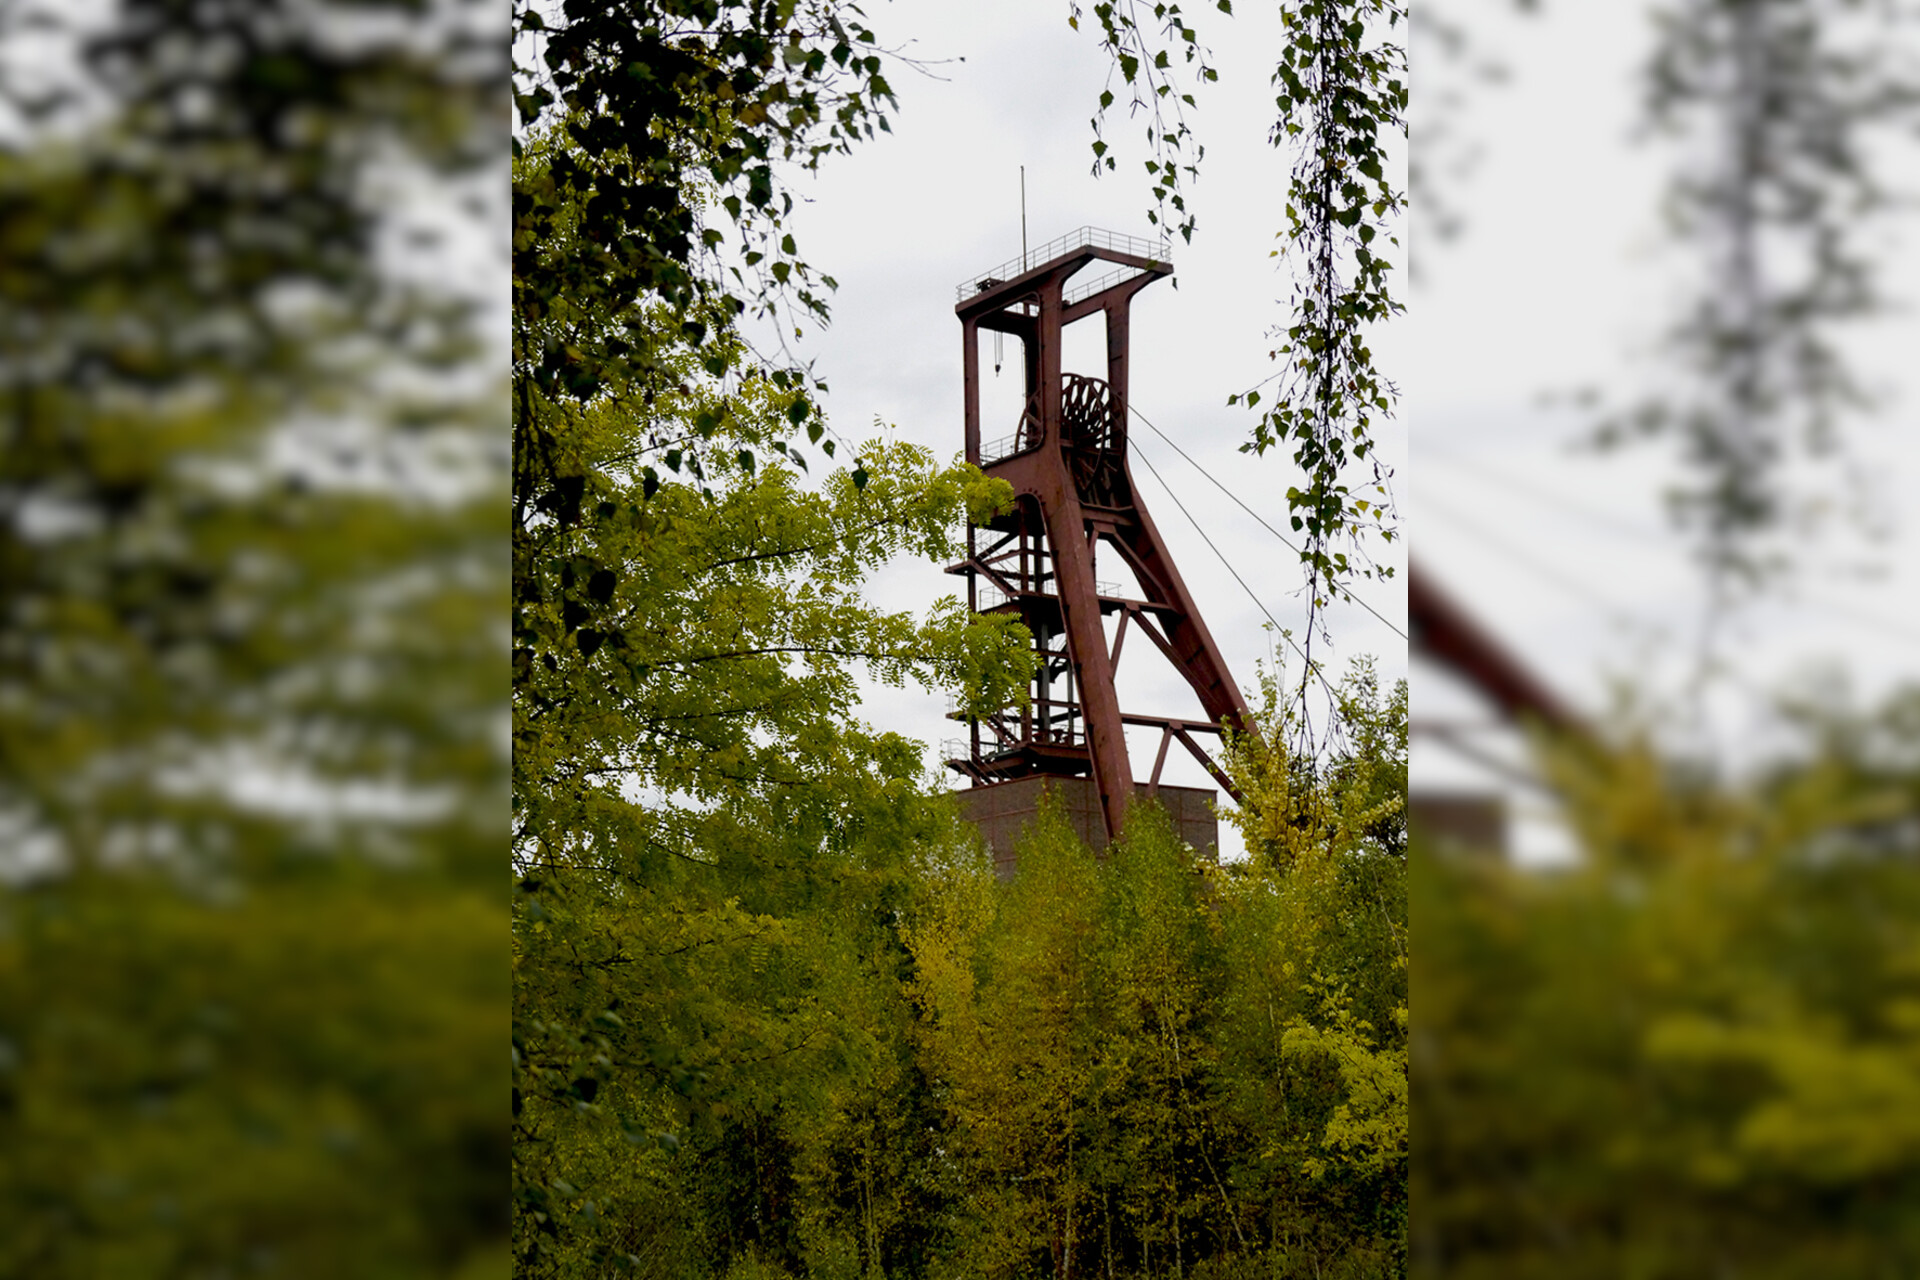 Fotokurs mit Fototour: Zeche Zollverein